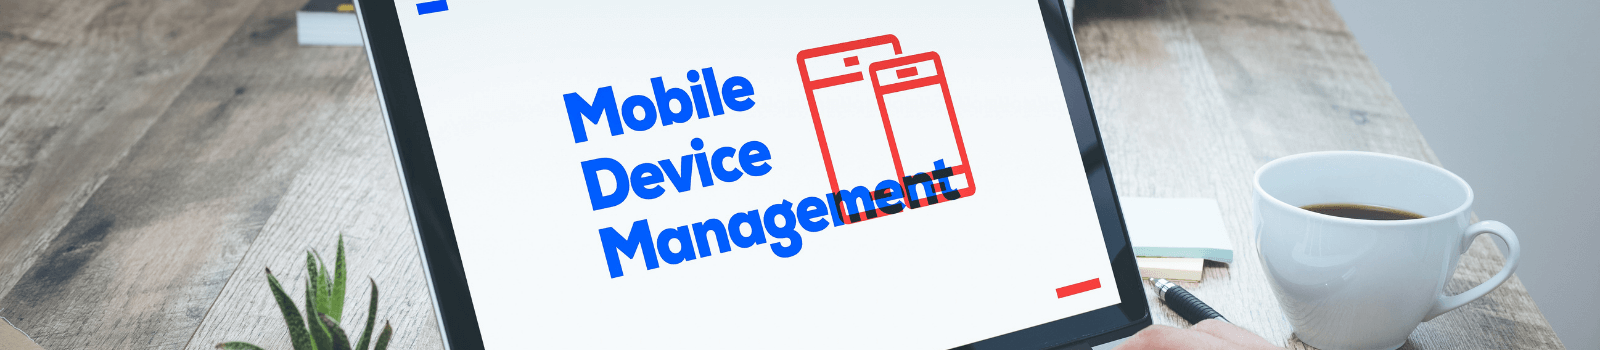 Managing Enterprise Mobility Through Mobile Device Management